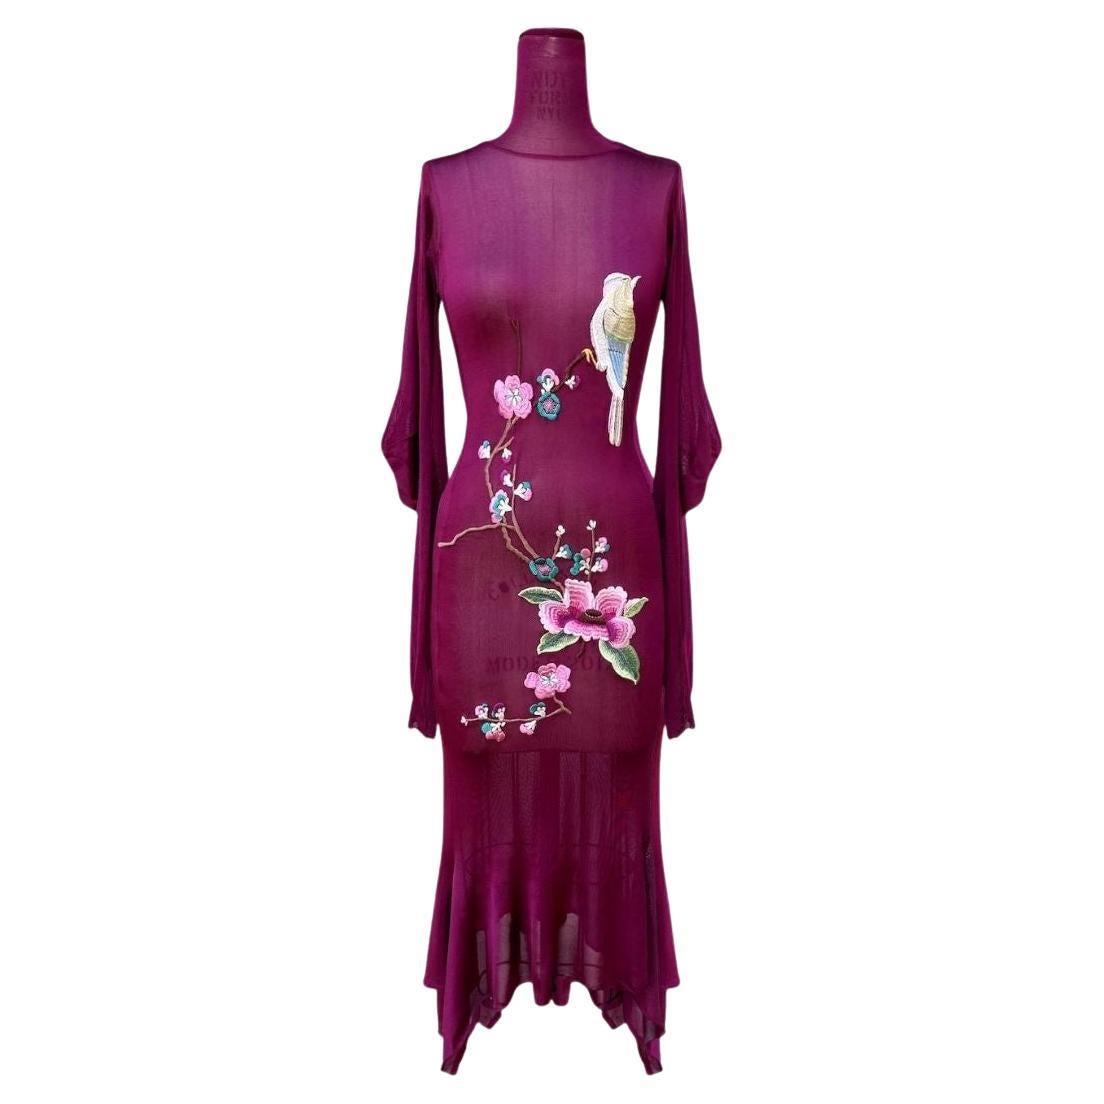 Christian Dior/John Galliano - Embroidered Cherry Blossom Dress F/W 2003 Sz 38FR